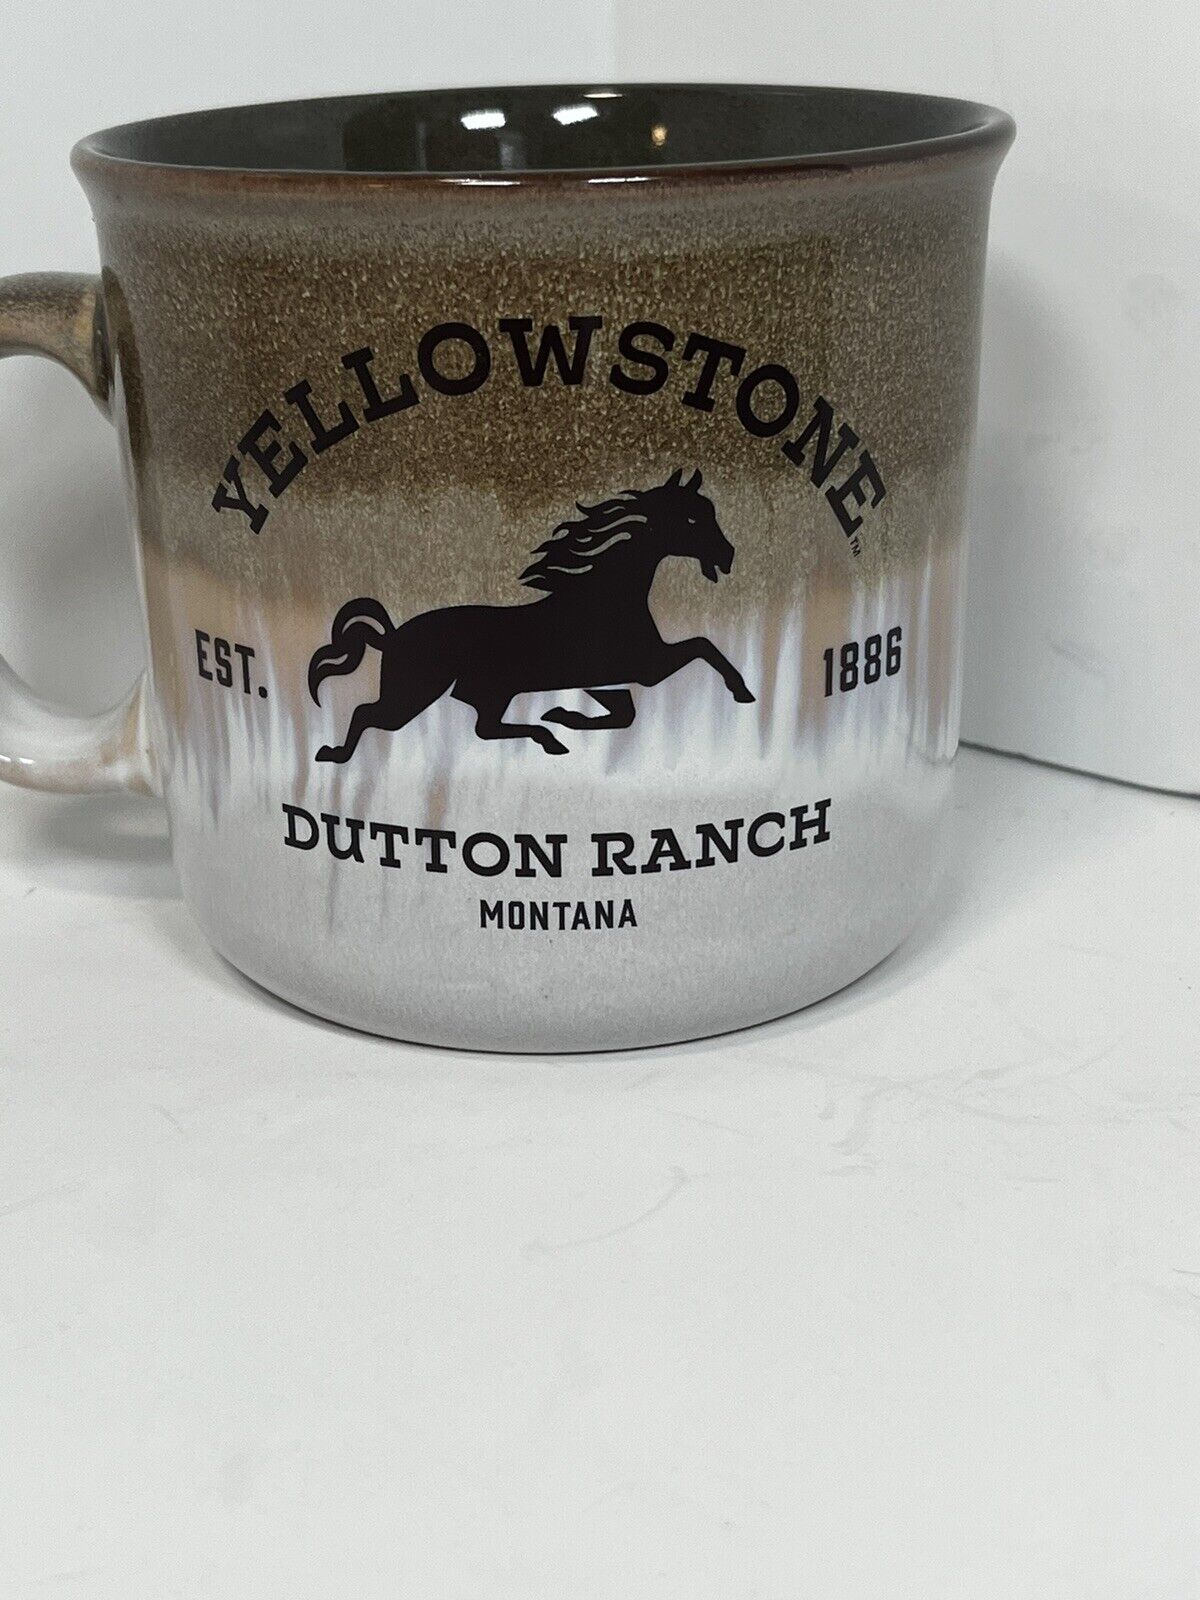 YELLOWSTONE DUTTON RANCH MONTANA Coffee/Tea Mug Cup LARGE 20 OZ. 2023 NEW